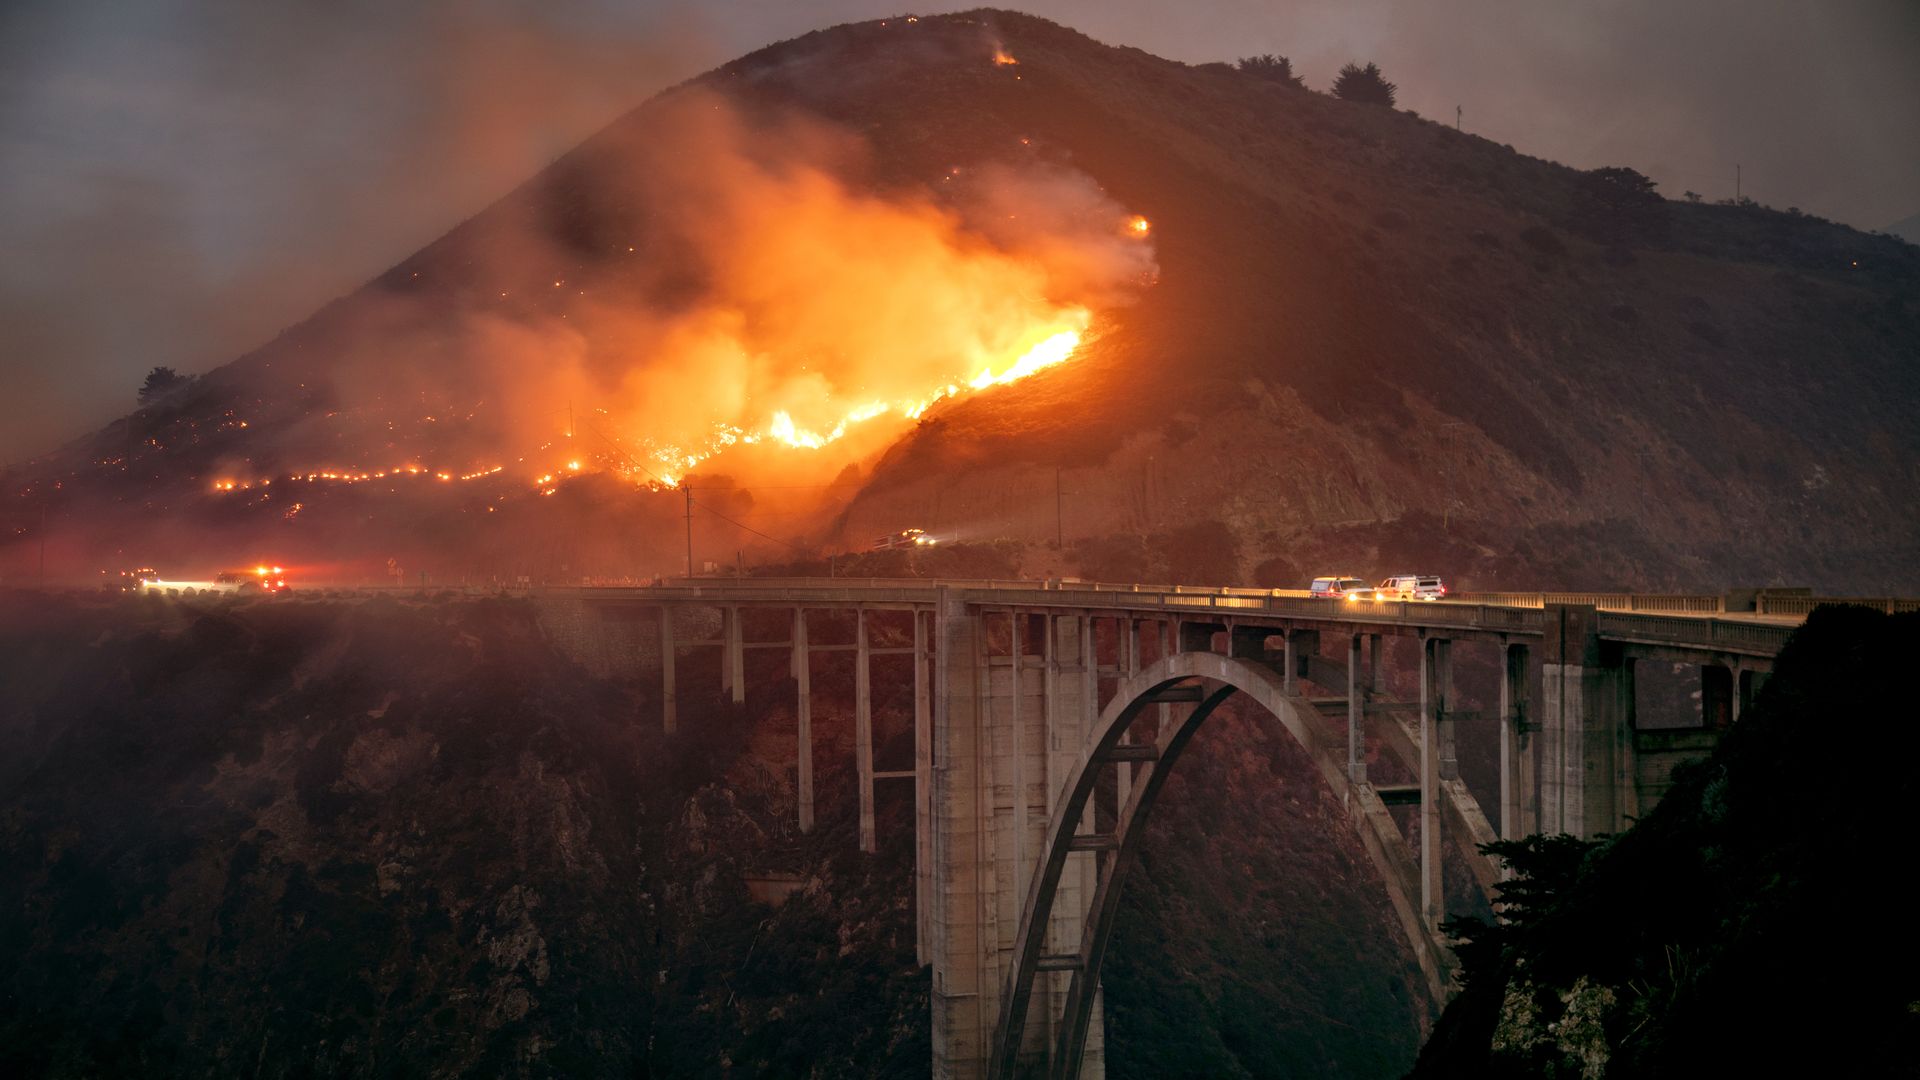 The Colorado Fiire burns down toward the Bixby Bridge in Big Sur, California, early Saturday morning